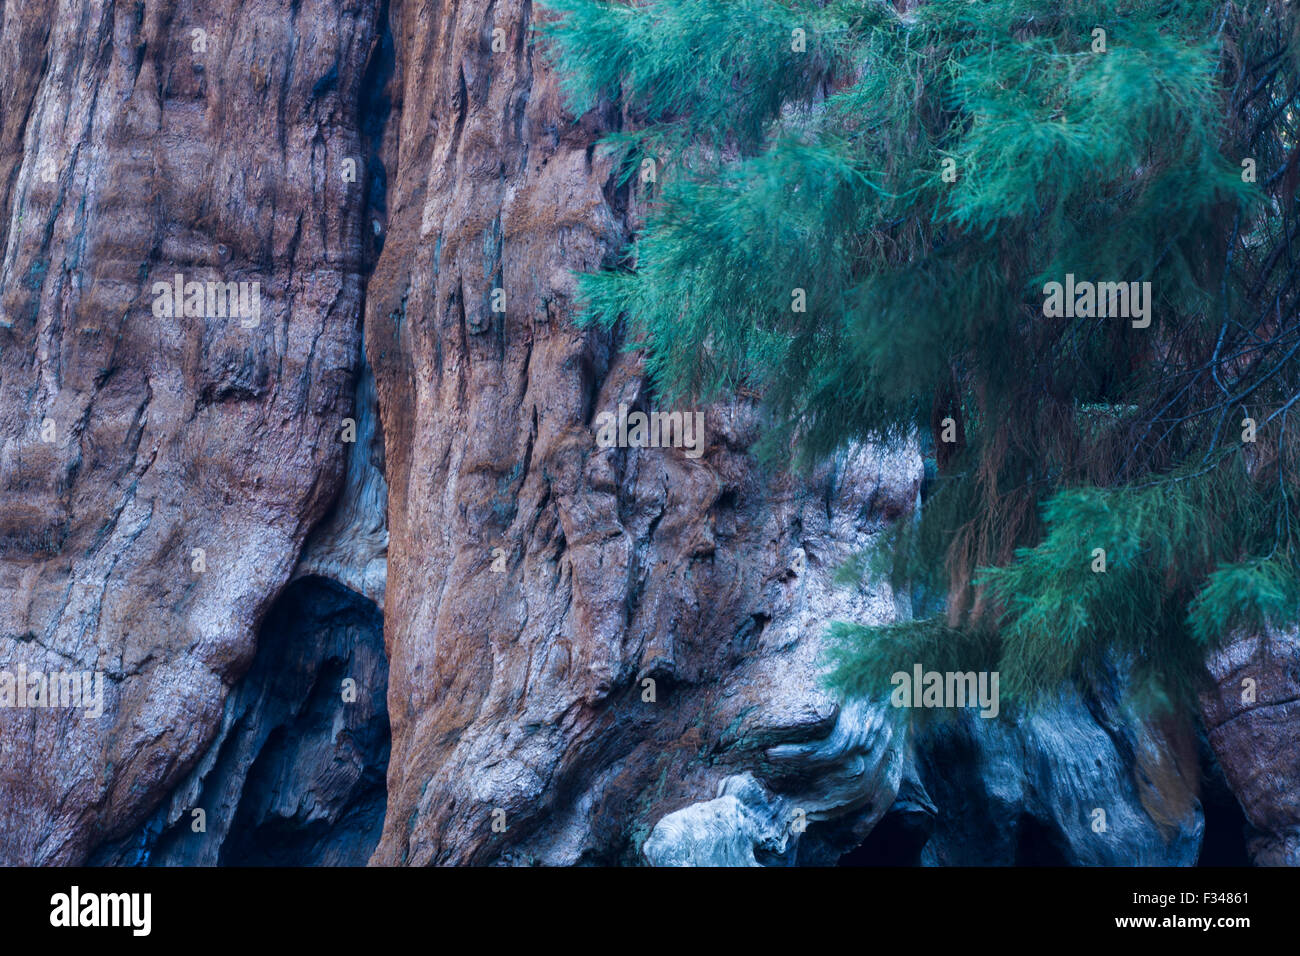 giant sequoia trees in Sequoia National Park, California, USA Stock Photo